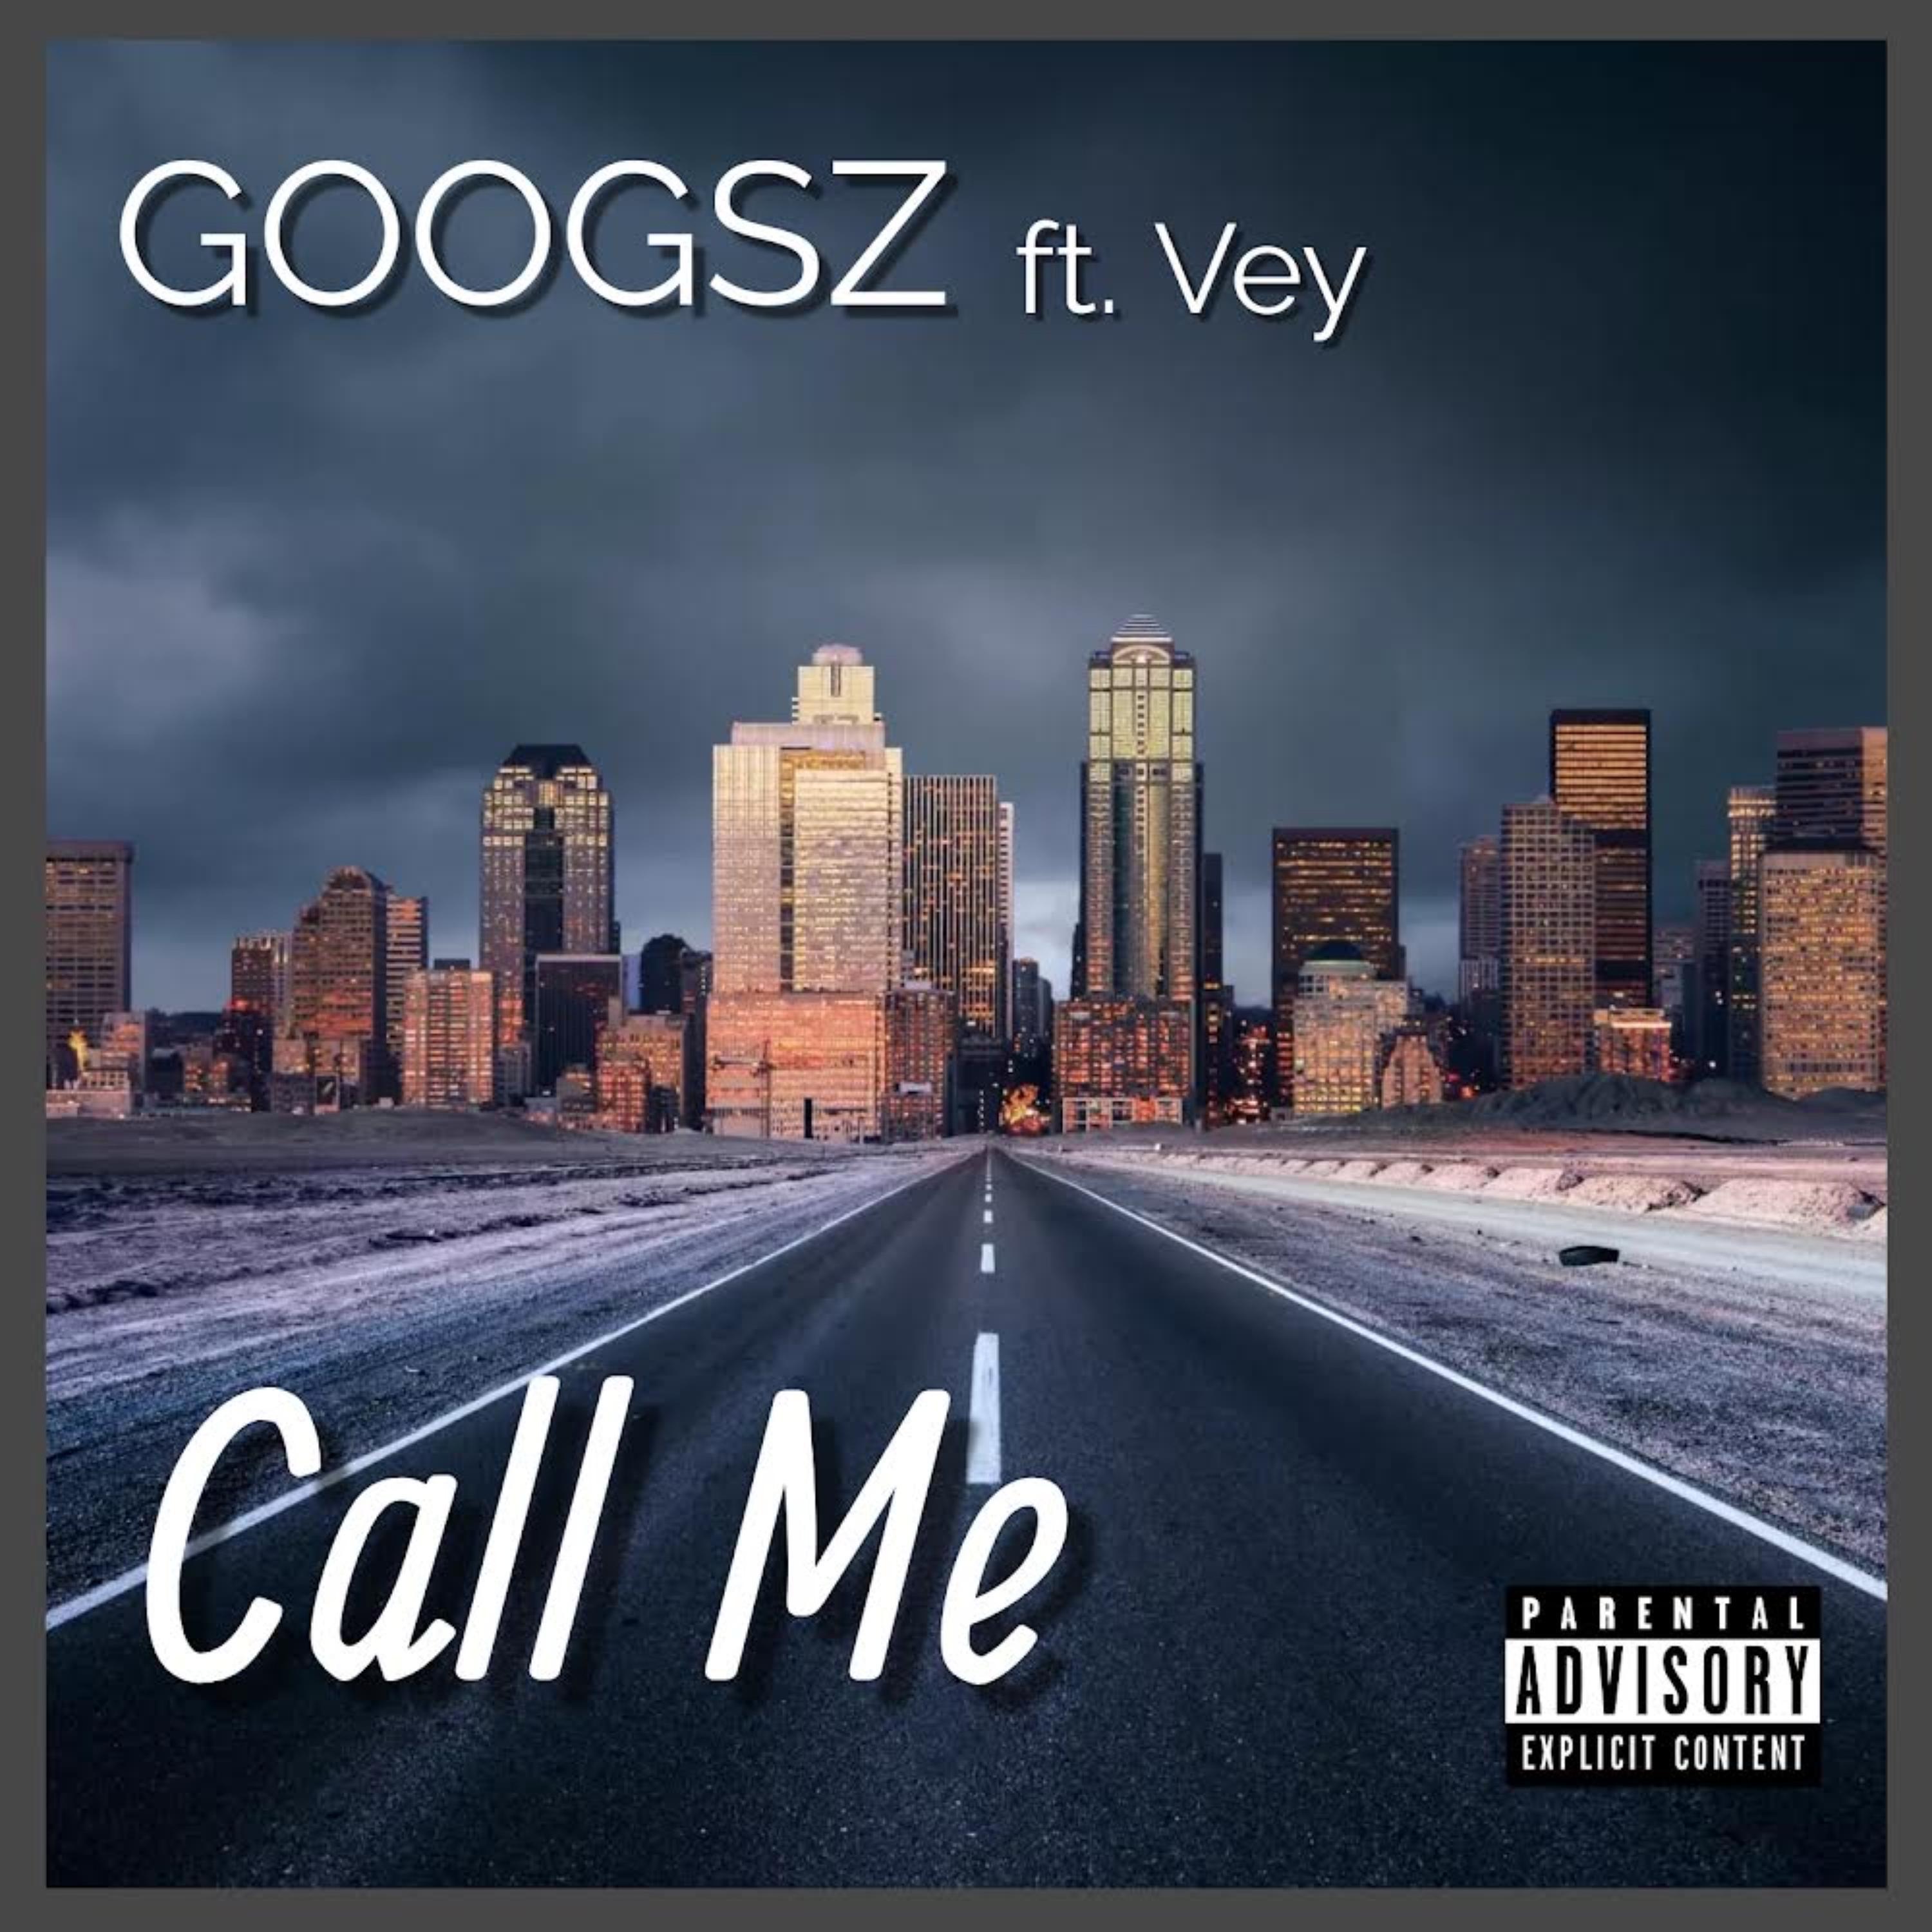 Googsz Kinnard - Call Me